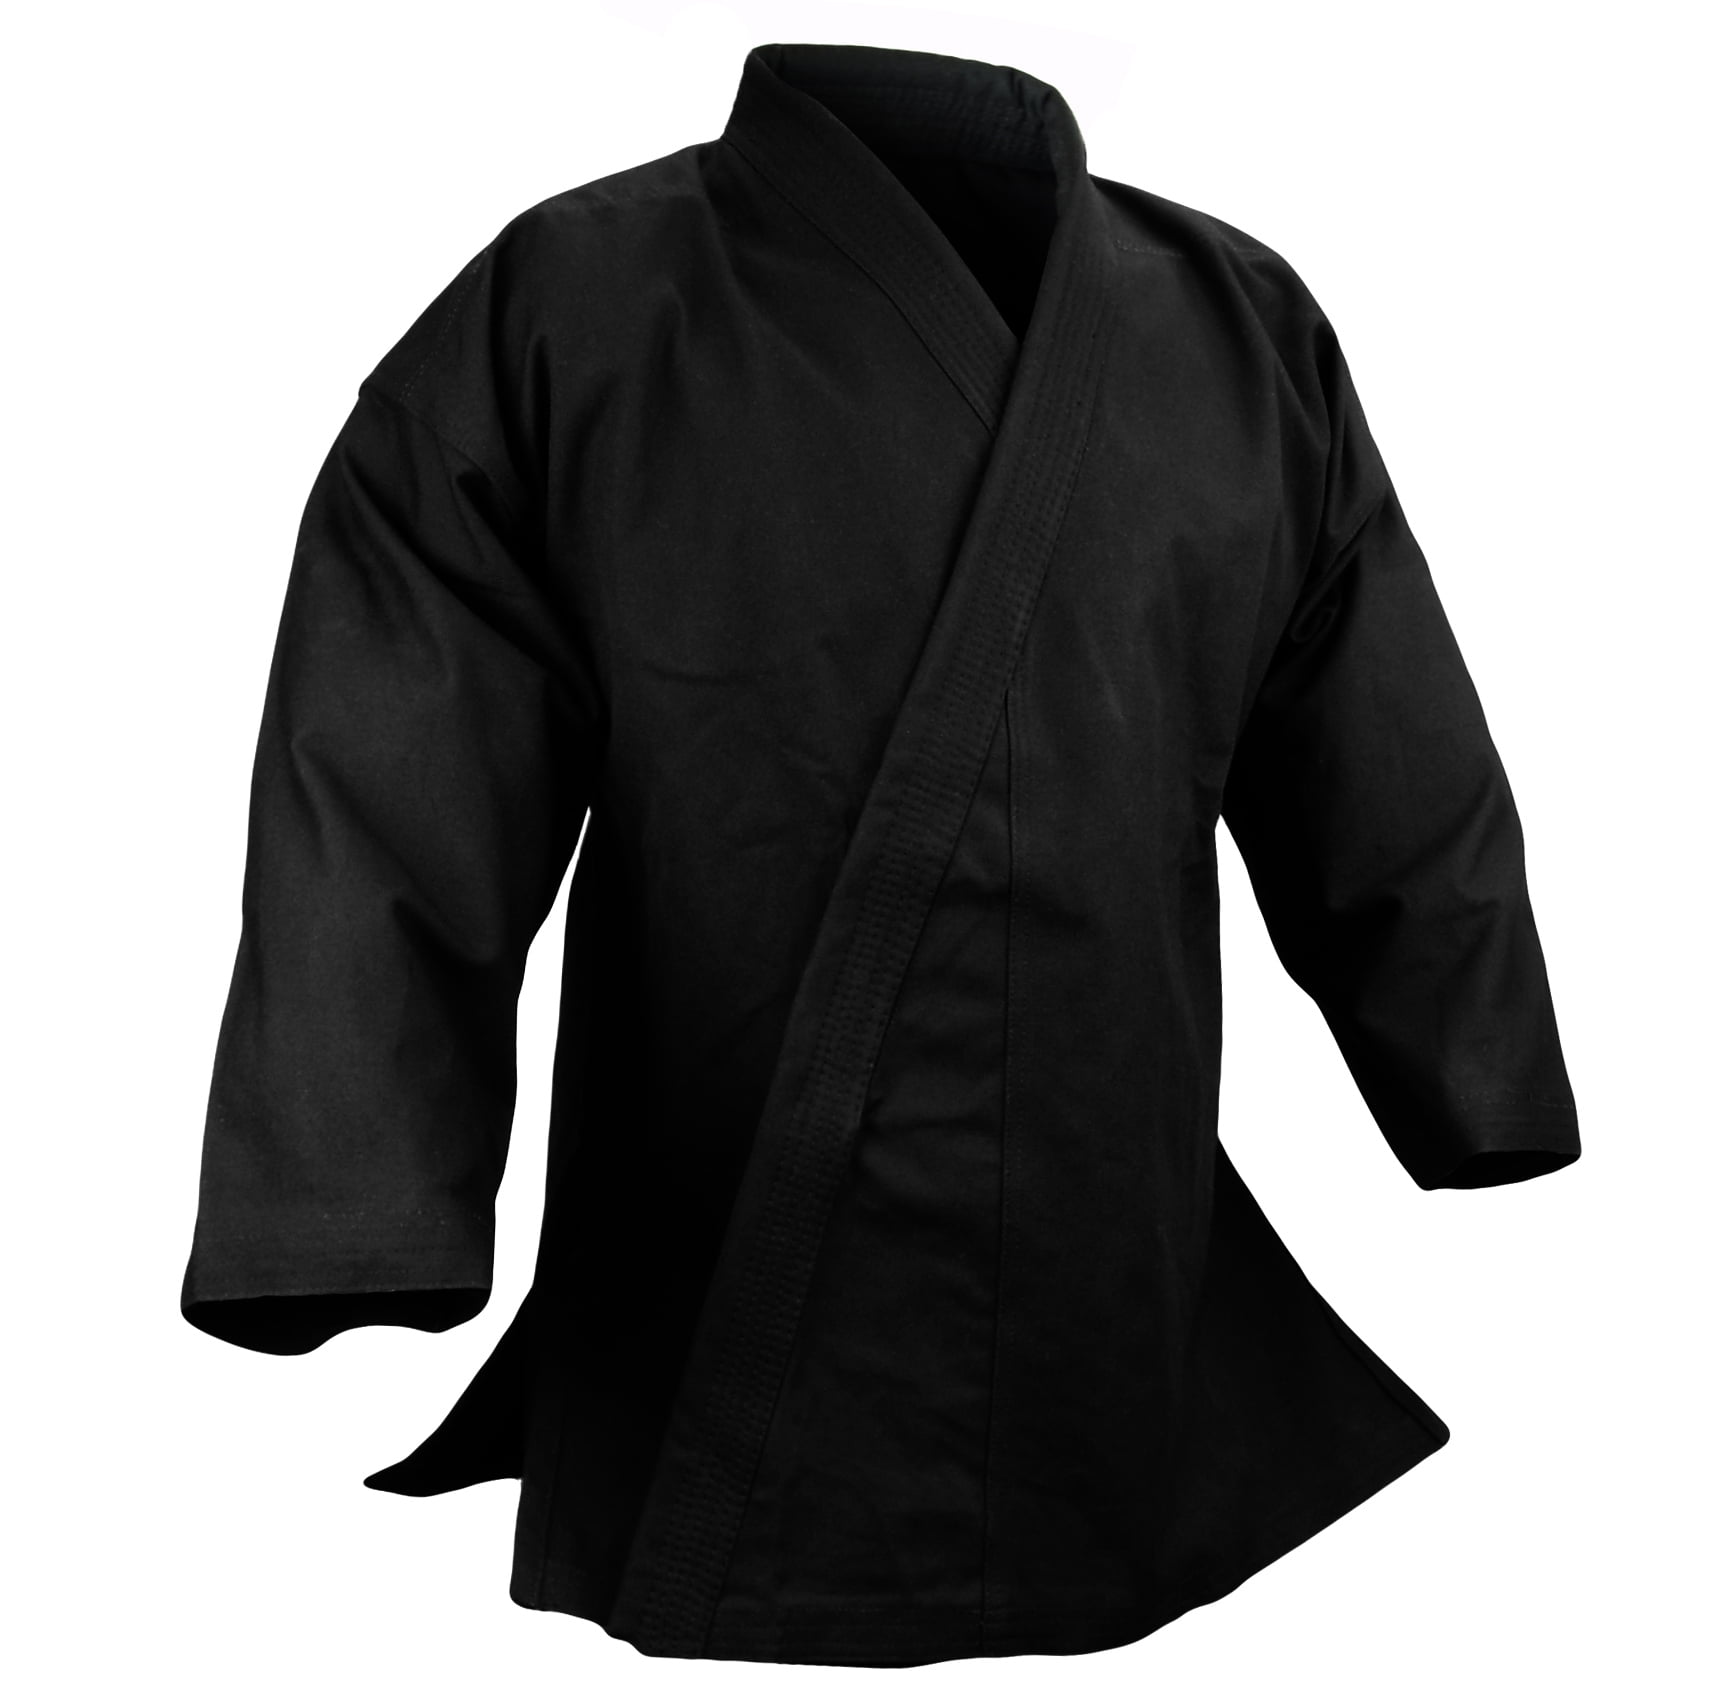 Prowin Corp Karate Jacket Heavy Wt 12 OZ 100% Cotton Preshrunk Martial Arts Gi New White/Black/Blue/Red